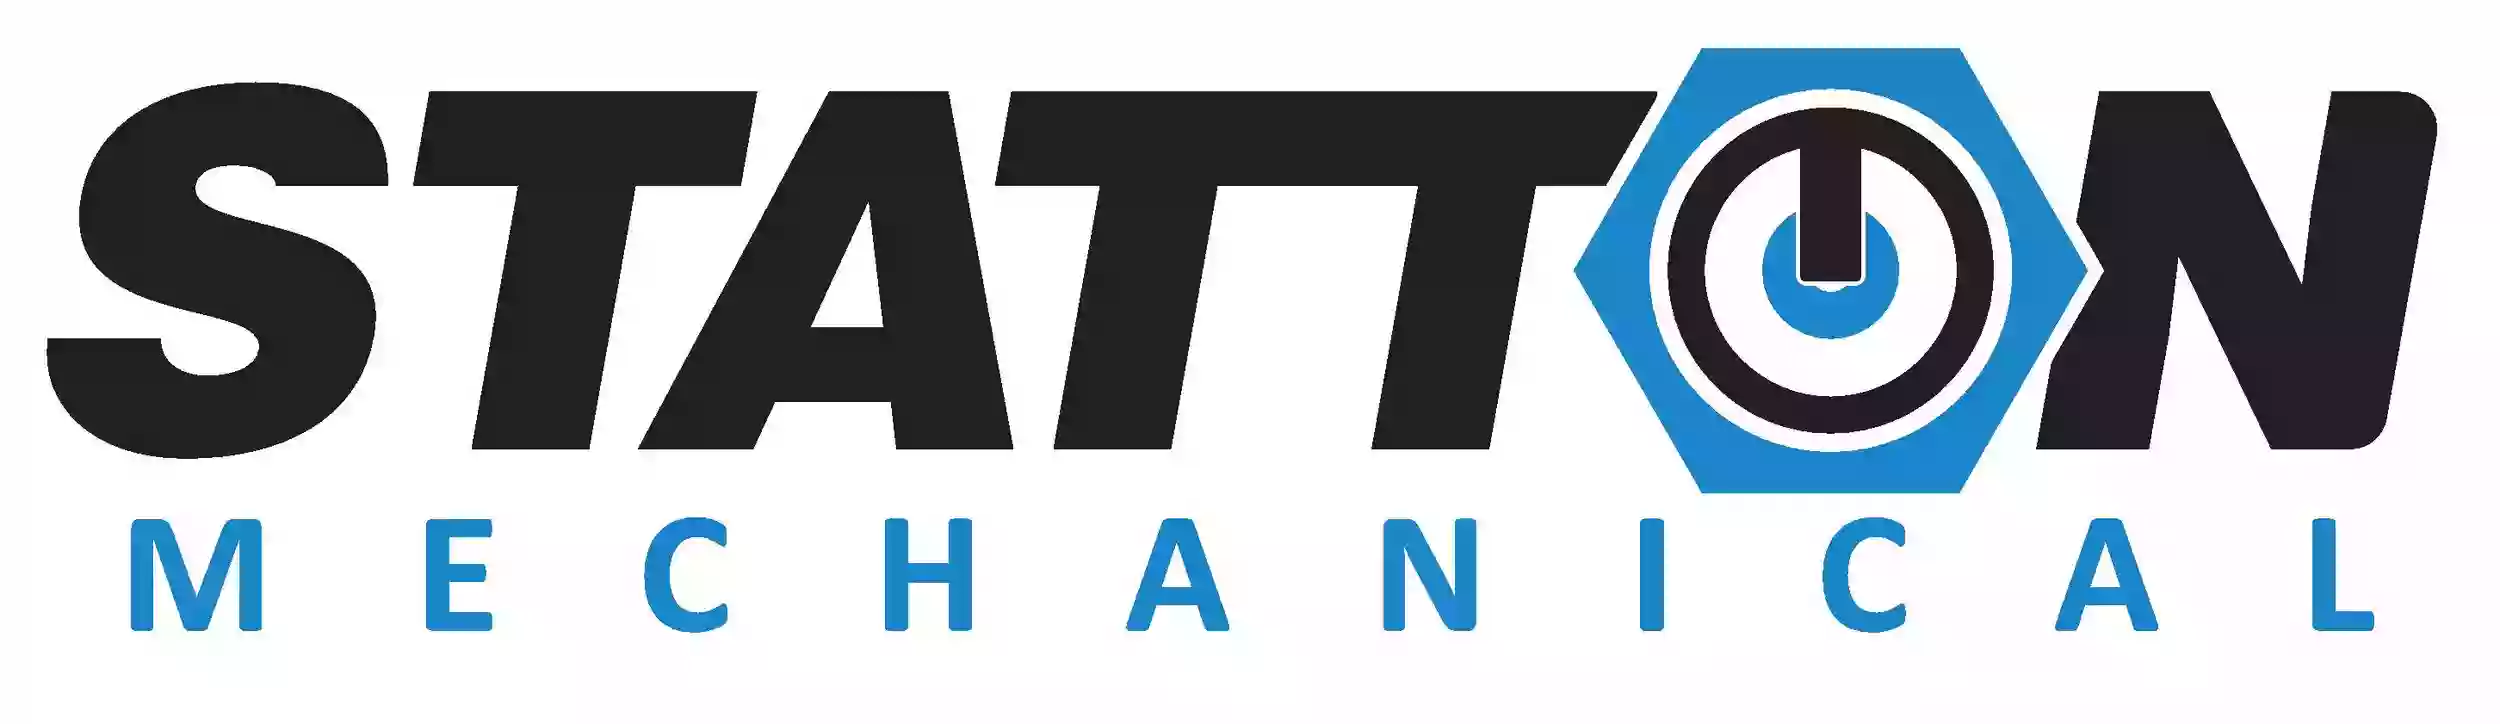 Statton Mechanical Services Pty Ltd